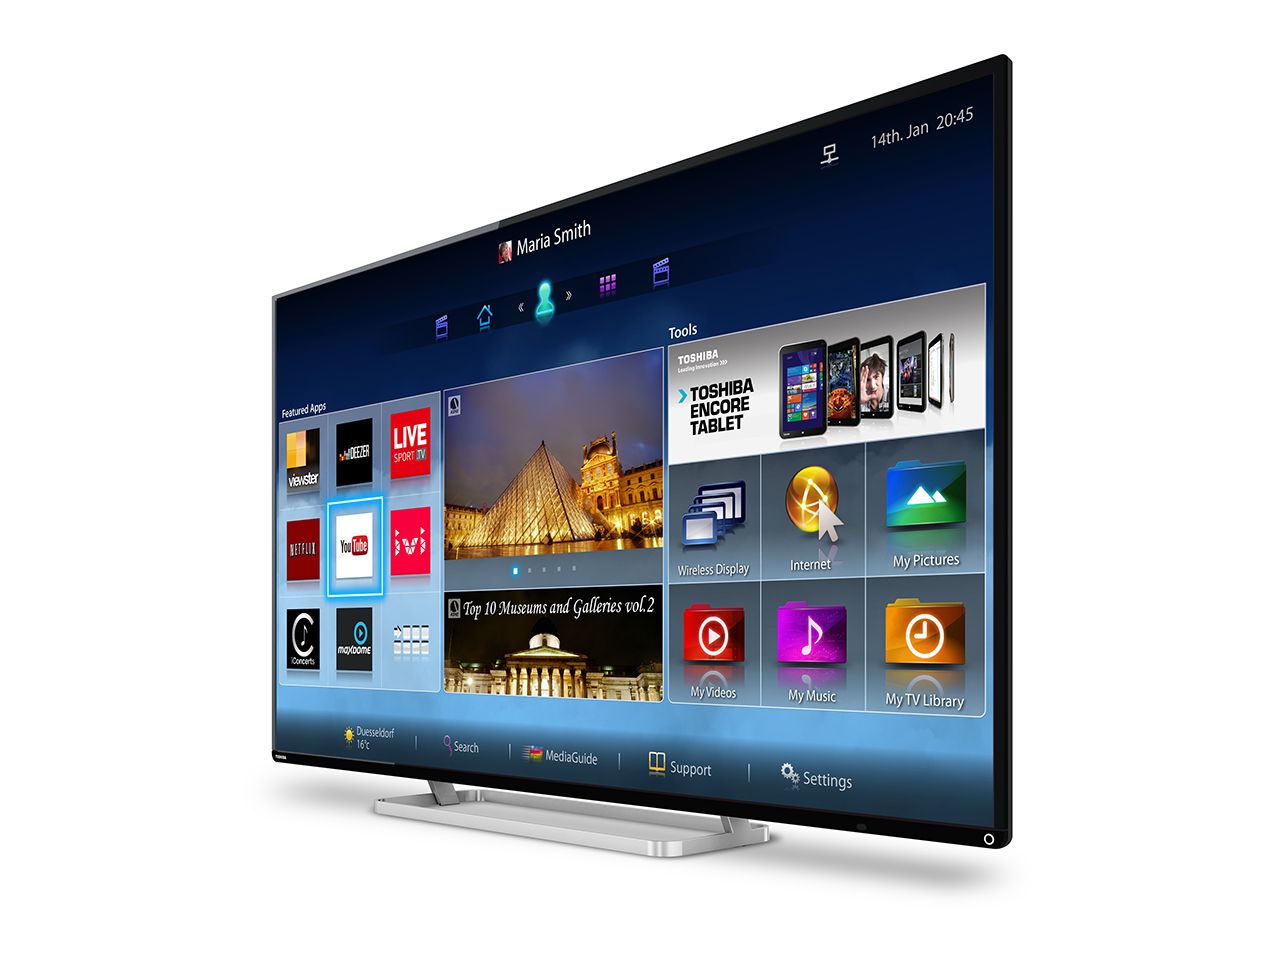 toshiba hd tv 2014 range refresh faster next gen smart tv joins top of range models image 1